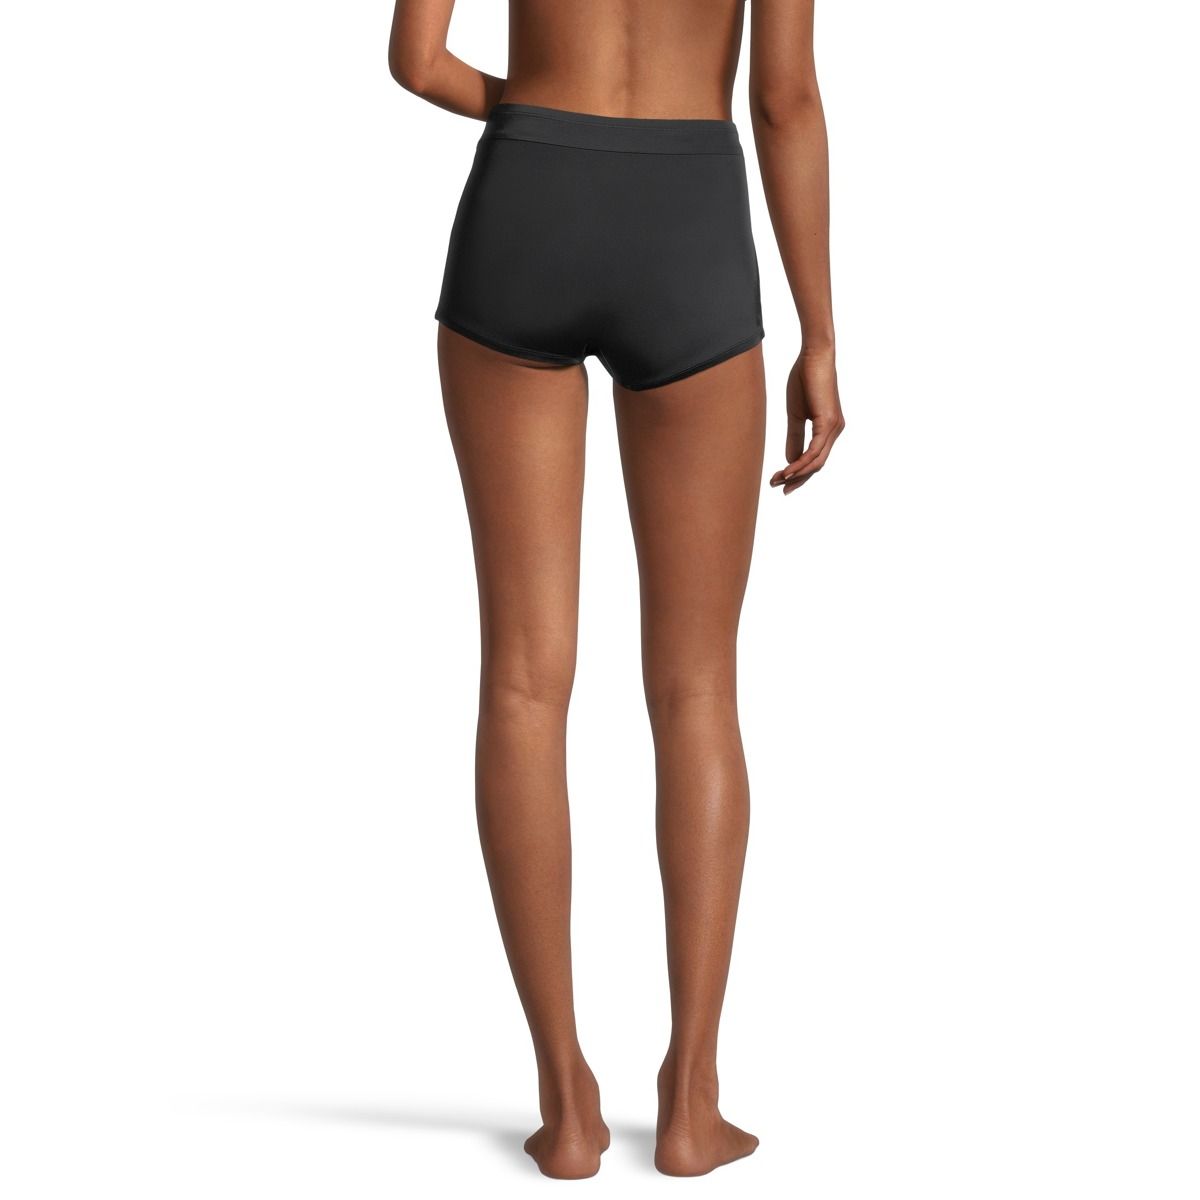 Ripzone Women's Solid Moon High Waisted Boy Short Swimsuit Bikini 